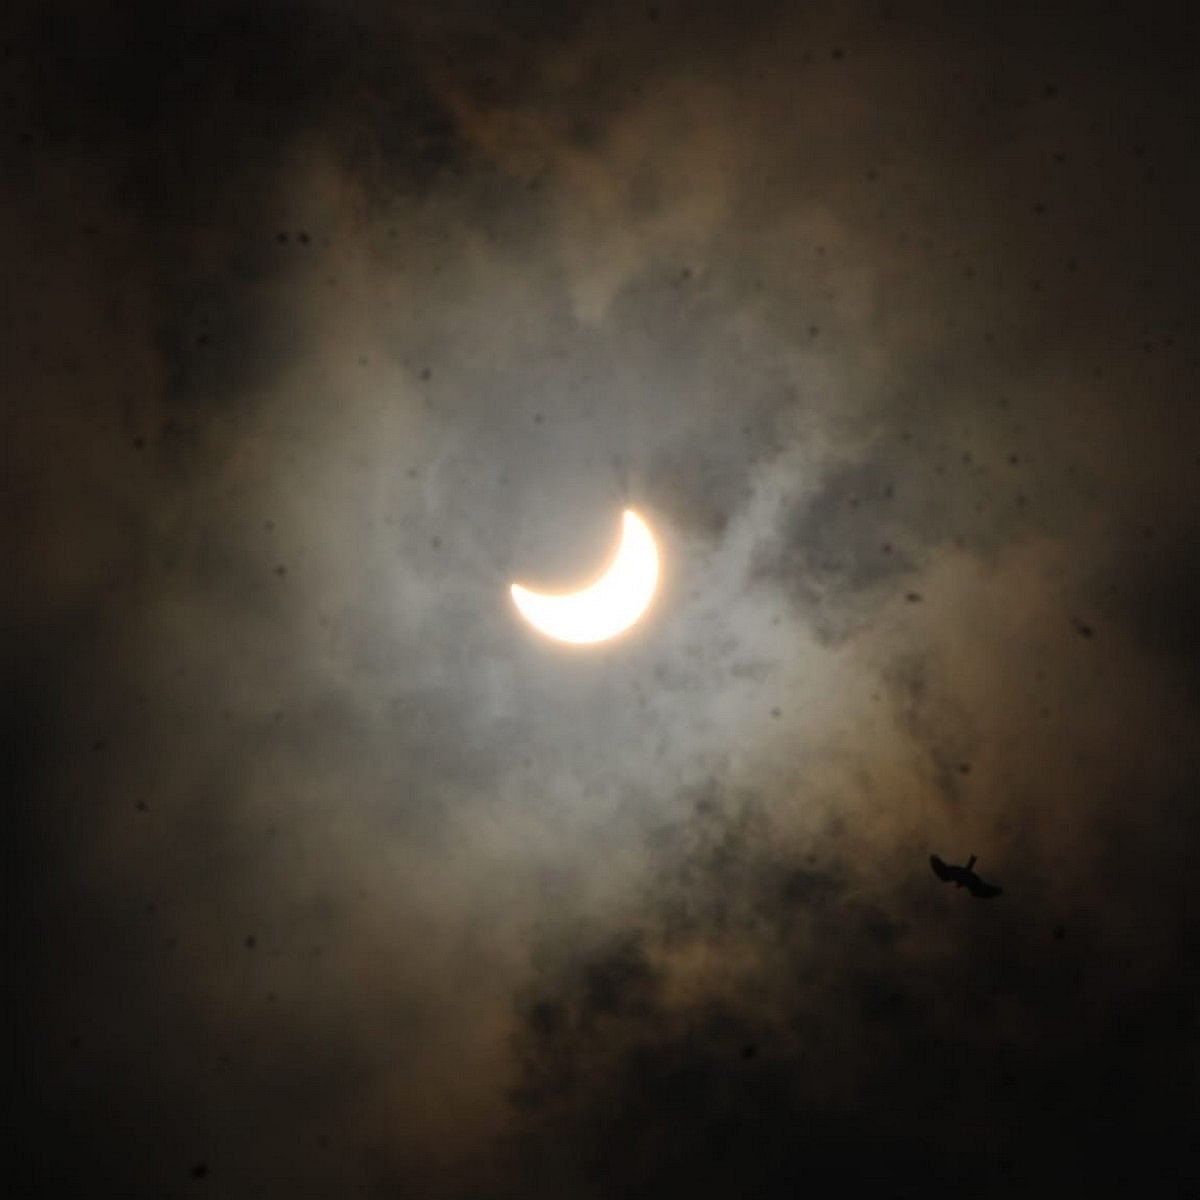 Eclipse In 2021 Date Time Sutak Kal Of Surya Grahan And Chandra Grahan Eclipse 2021 26 à¤®à¤ˆ 2021 à¤• à¤¹ à¤¸ à¤² à¤• à¤ªà¤¹à¤² à¤š à¤¦ à¤°à¤— à¤°à¤¹à¤£ à¤œ à¤¨ à¤ à¤— à¤°à¤¹à¤£ à¤¸ à¤œ à¤¡ à¤¬ à¤¤ Amar Ujala Hindi News Live